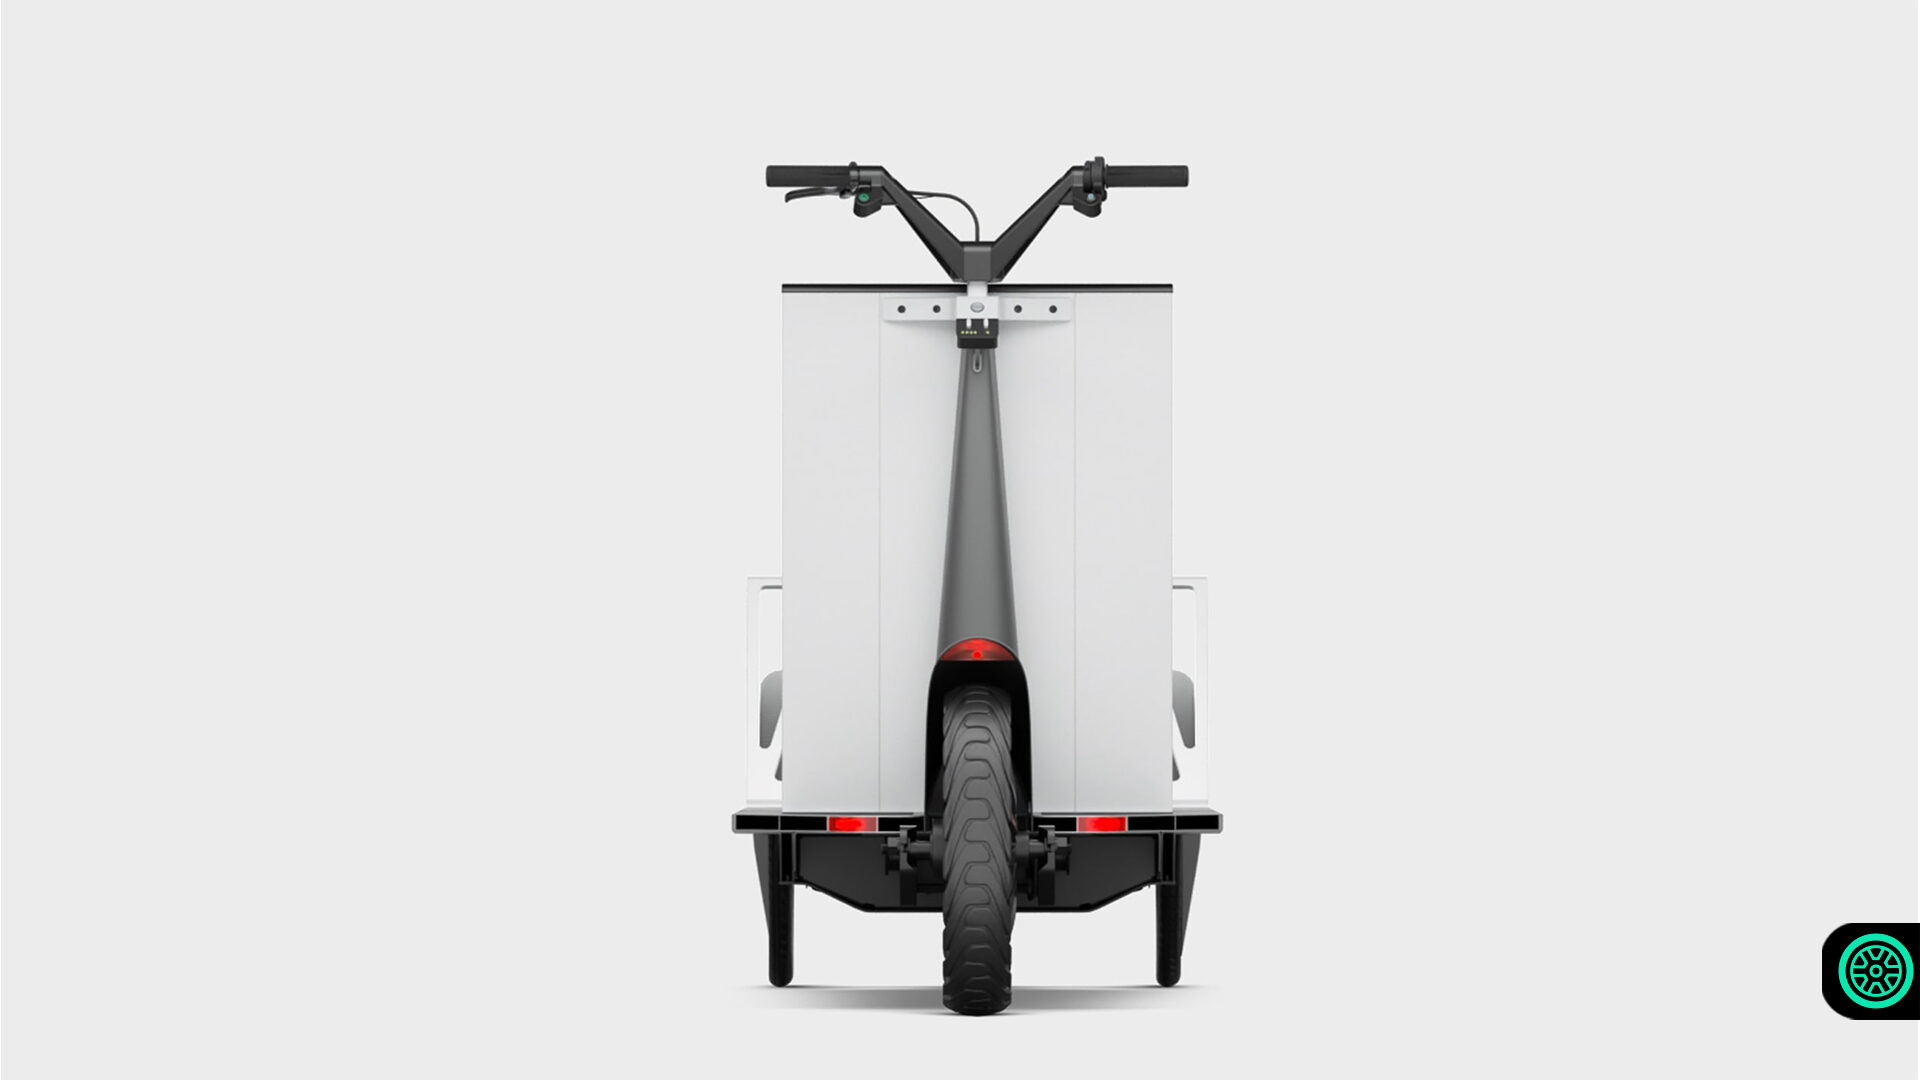 Polestar Re:Move teslimat scooter konsepti tanıtıldı! 9